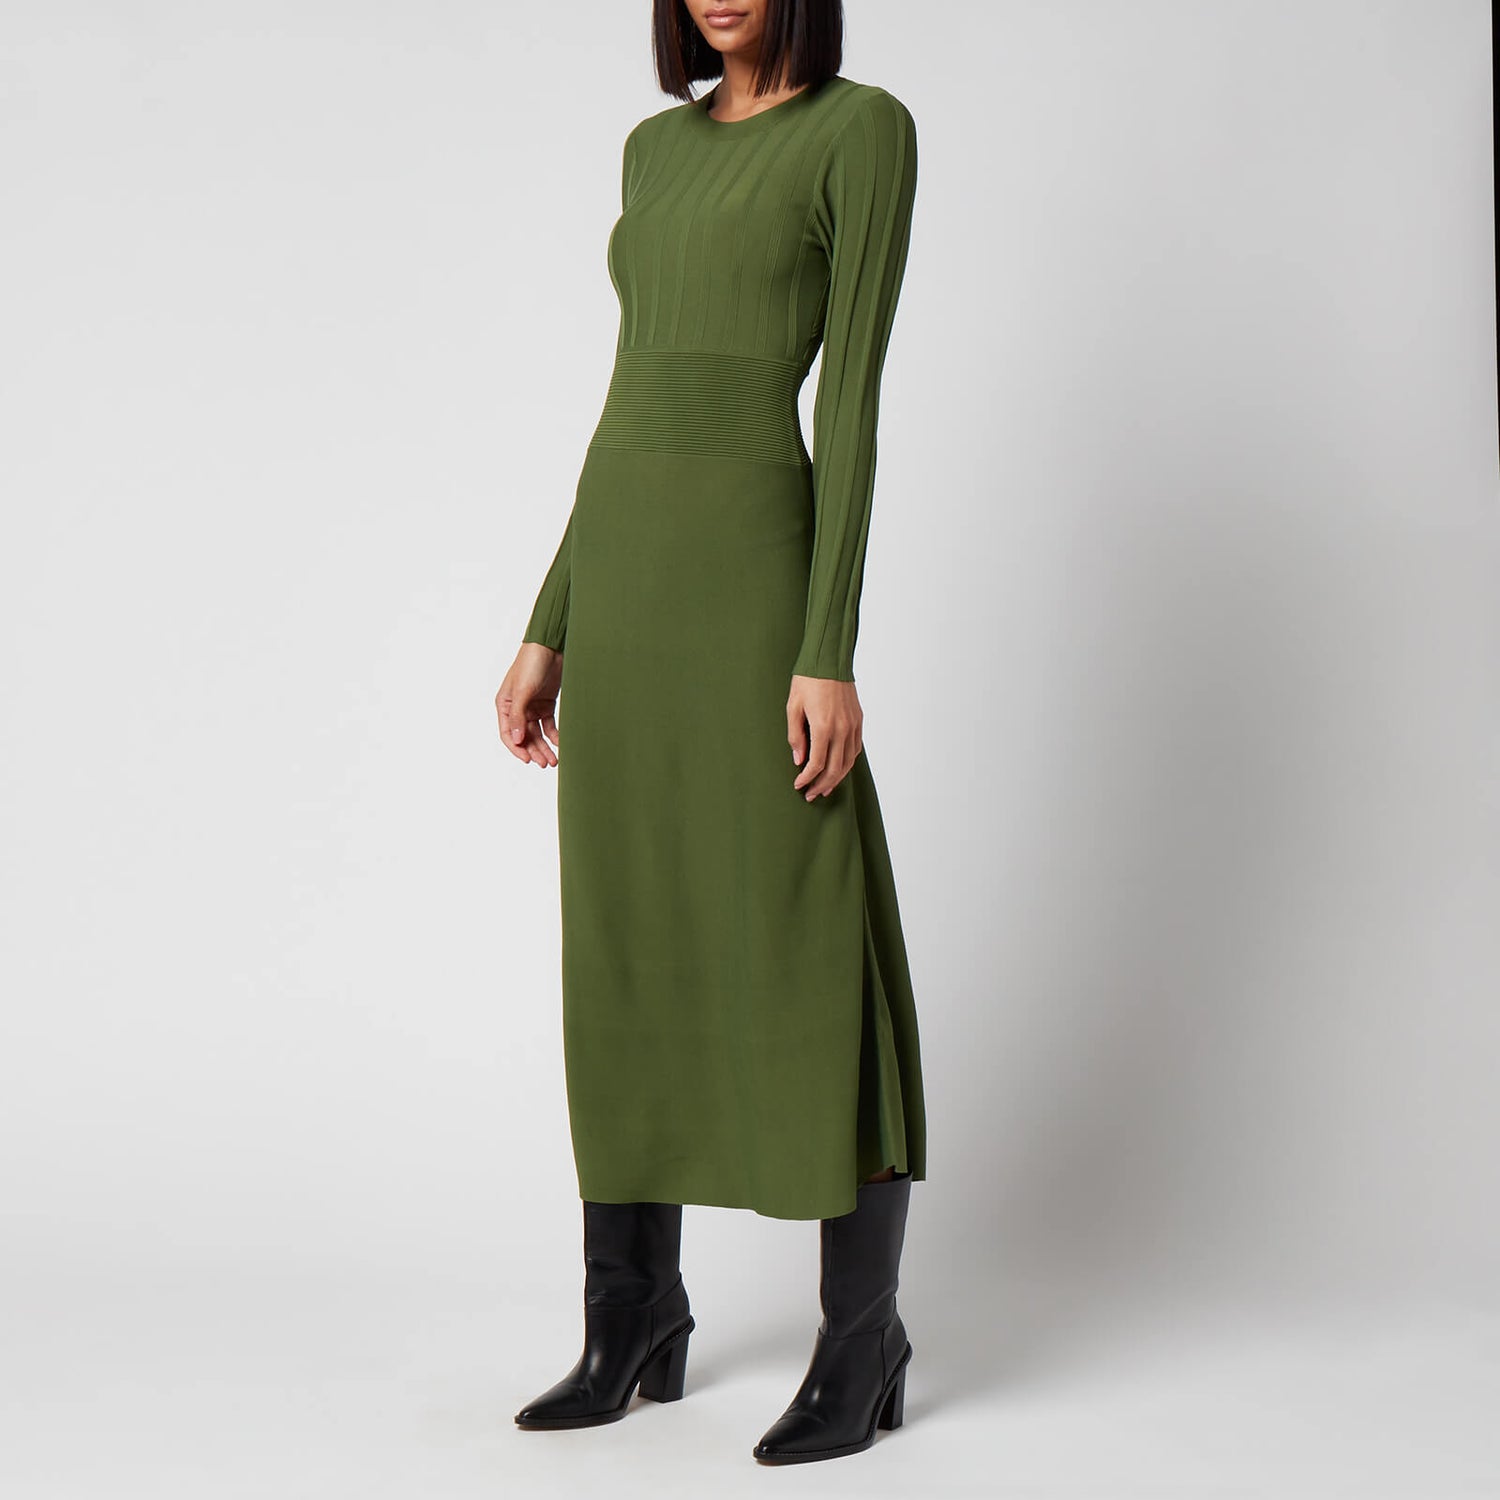 Ted Baker Women's Aimyy Dress - Green - UK 6